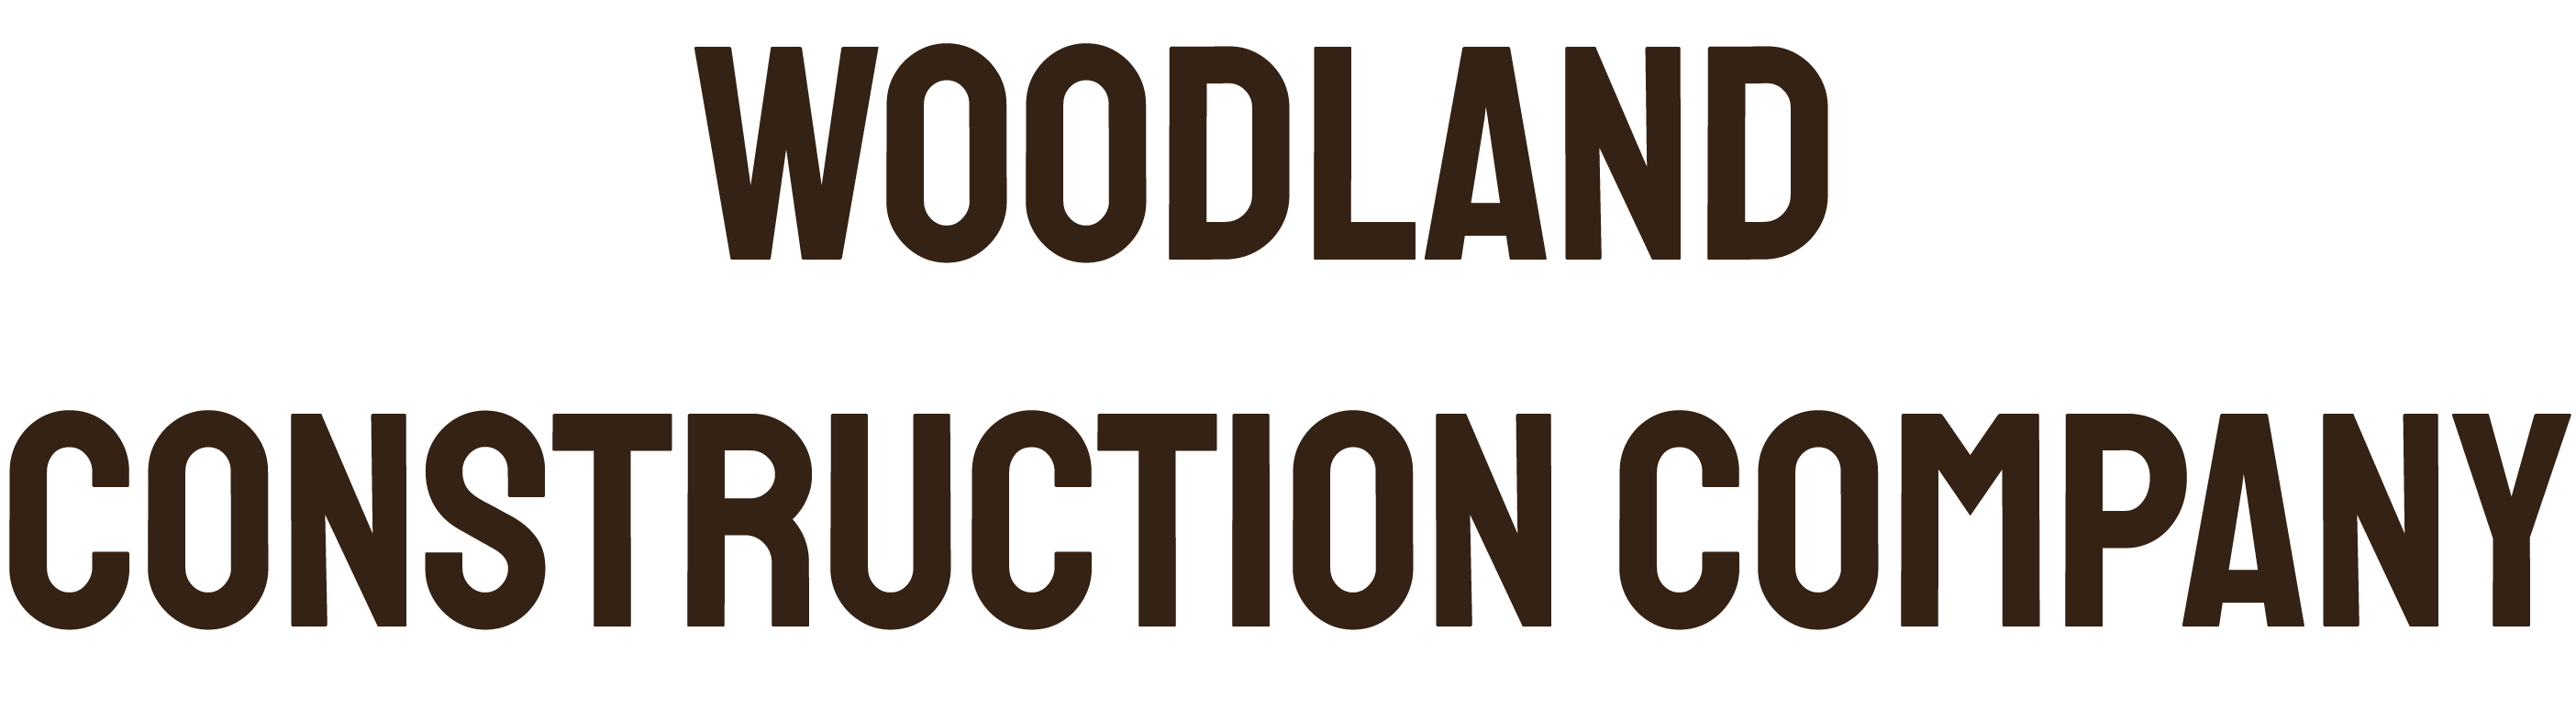 Woodland Construction Company Sponser